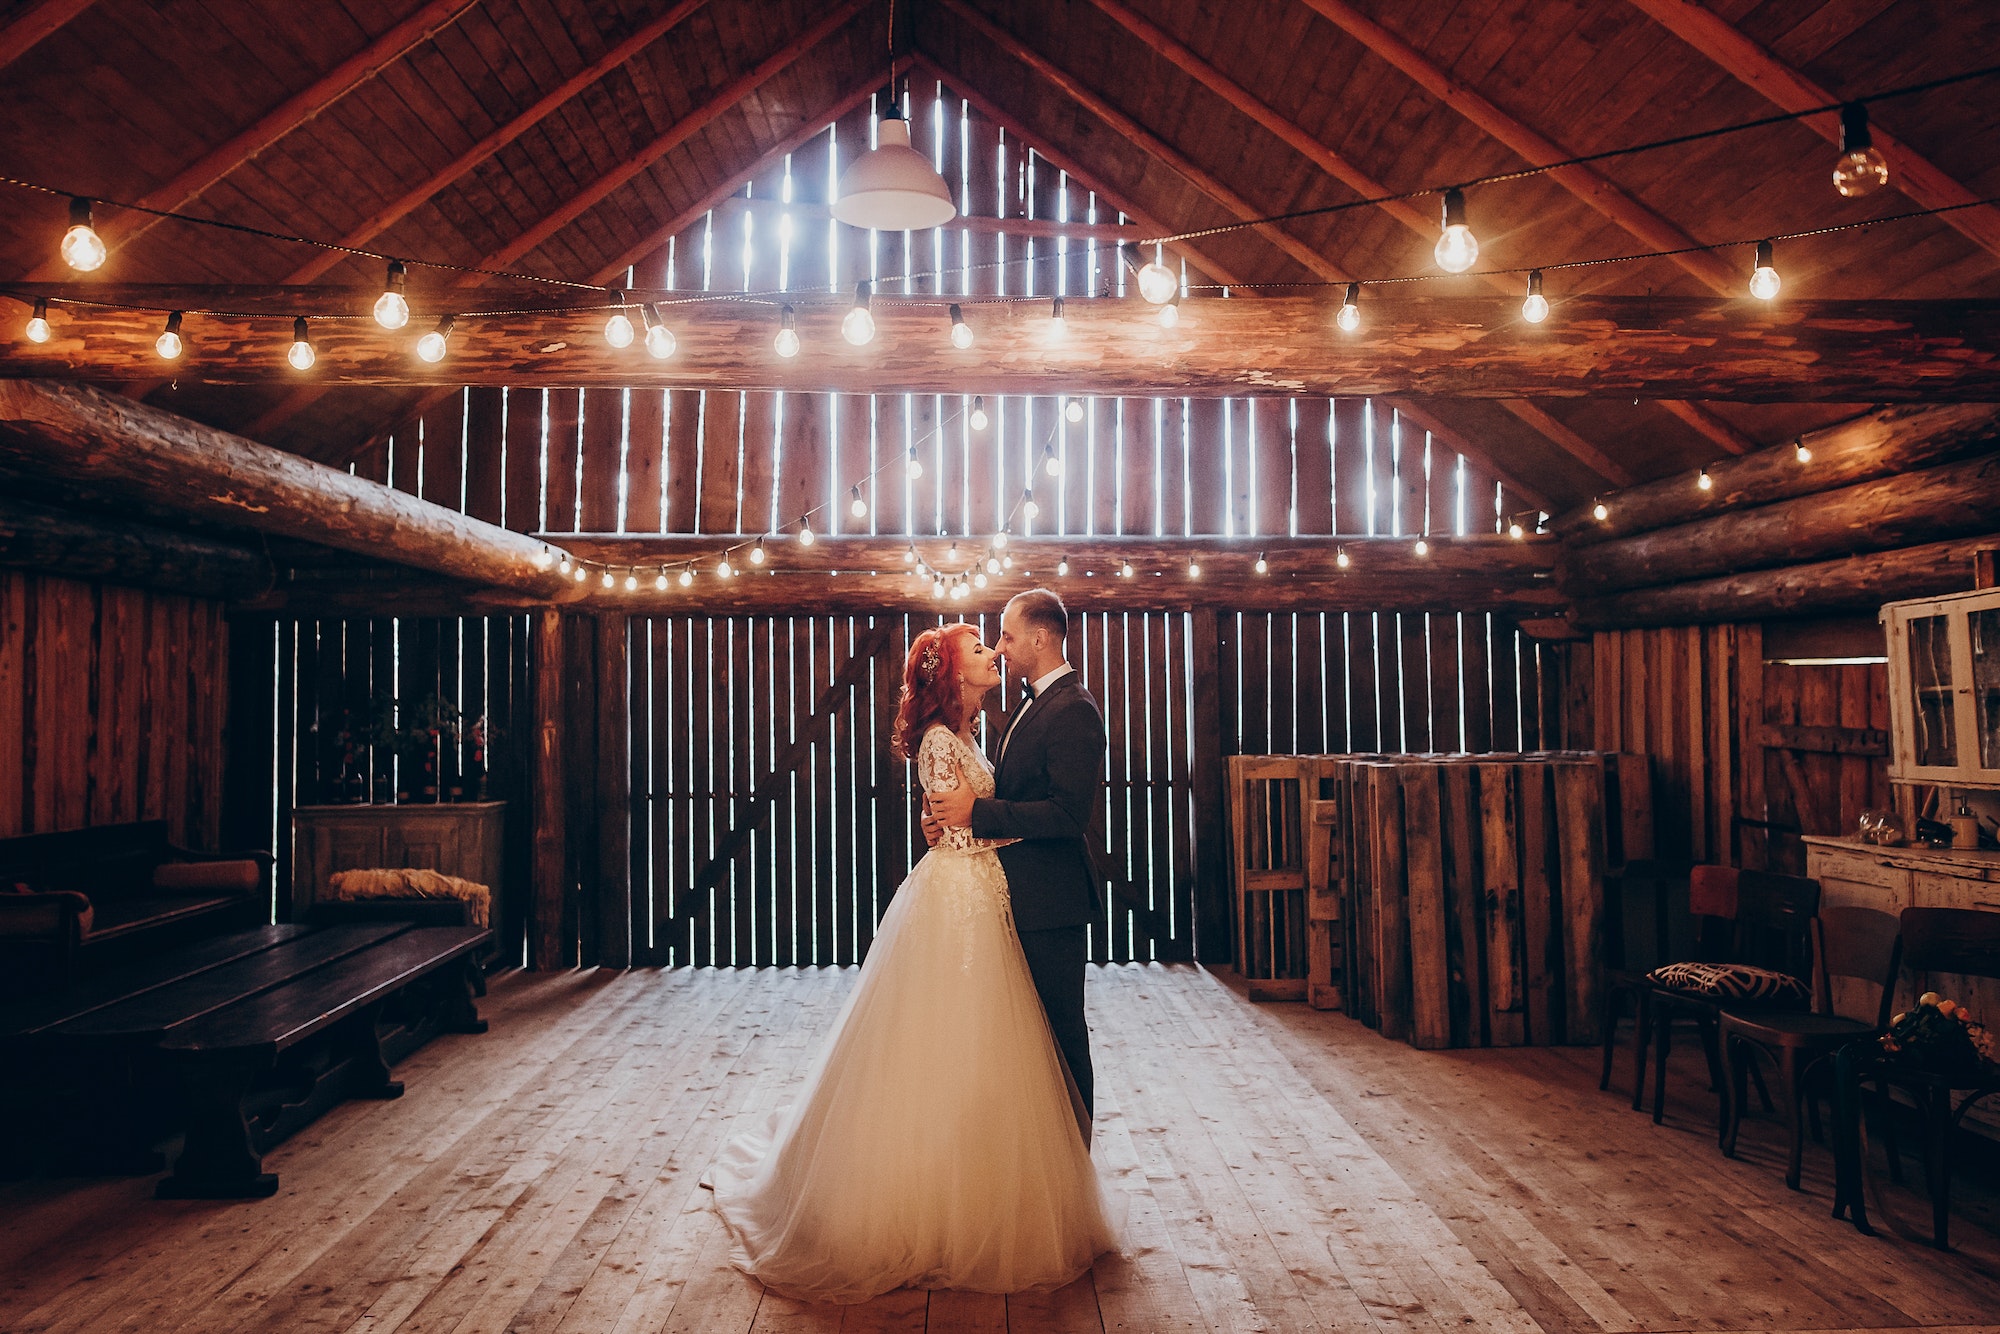 stylish groom and happy bride under retro bulbs lights in wooden barn